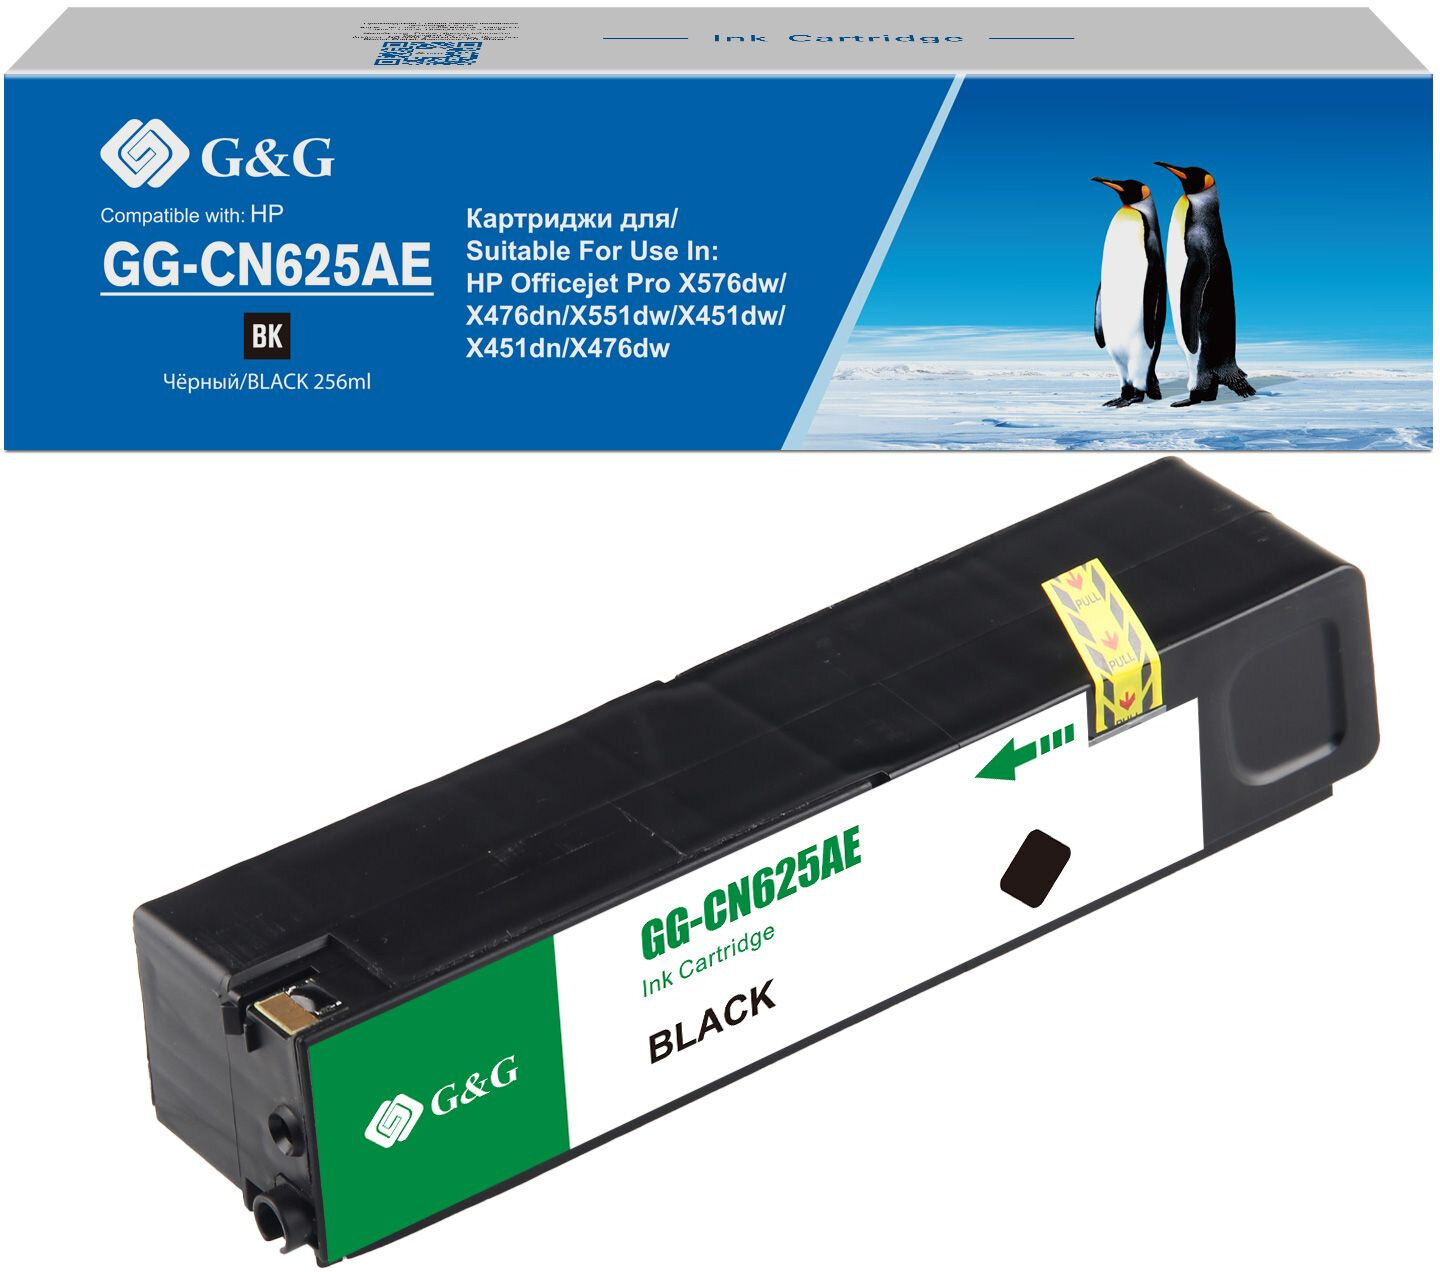 G&G Картридж струйный G&G GG-CN625AE черный (256мл) для HP Officejet Pro X576dw/X476dn/X551dw/X451dw